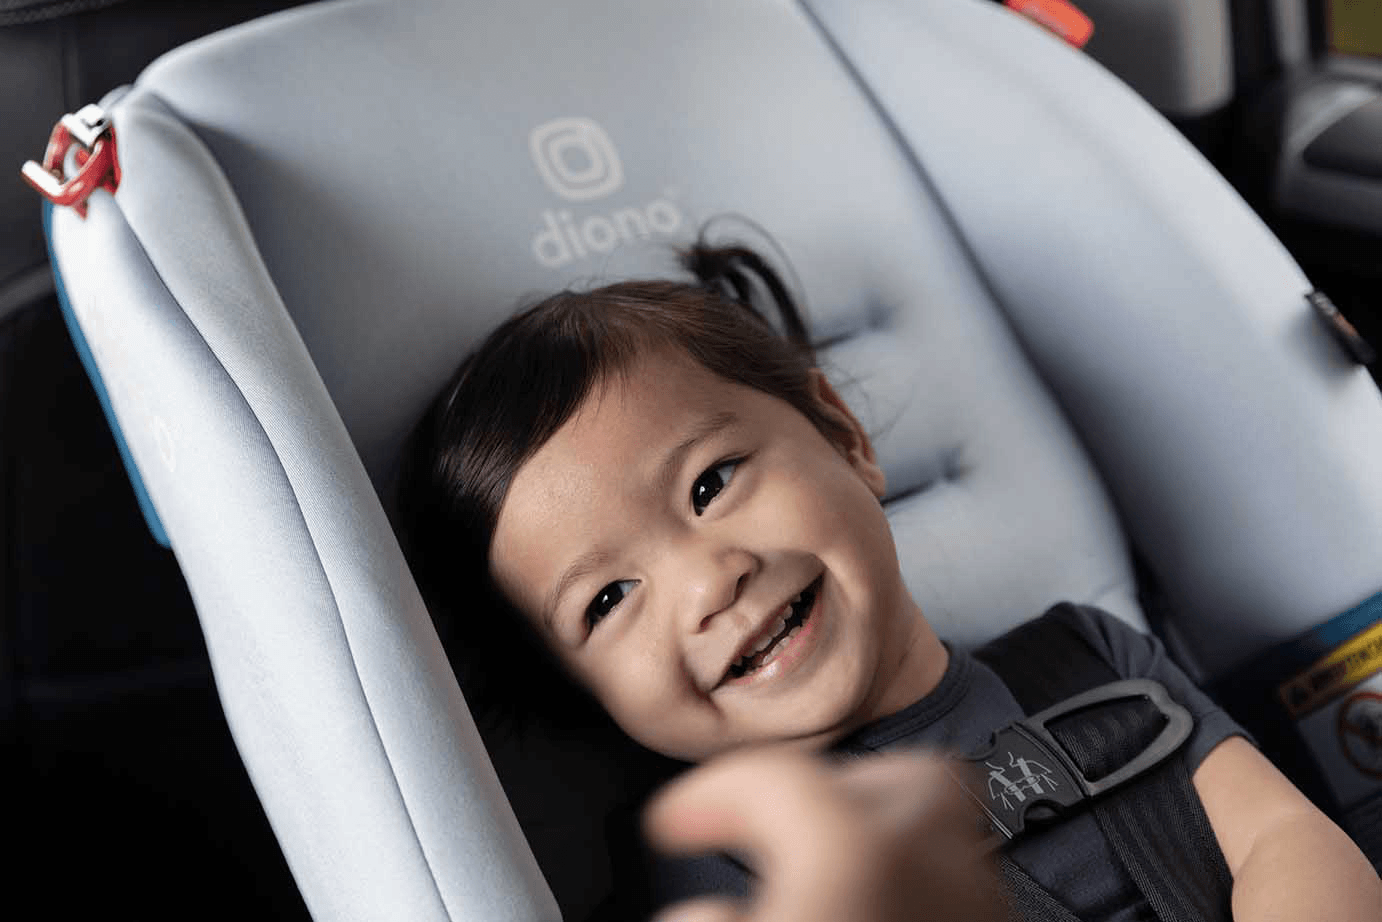 kid in car seat